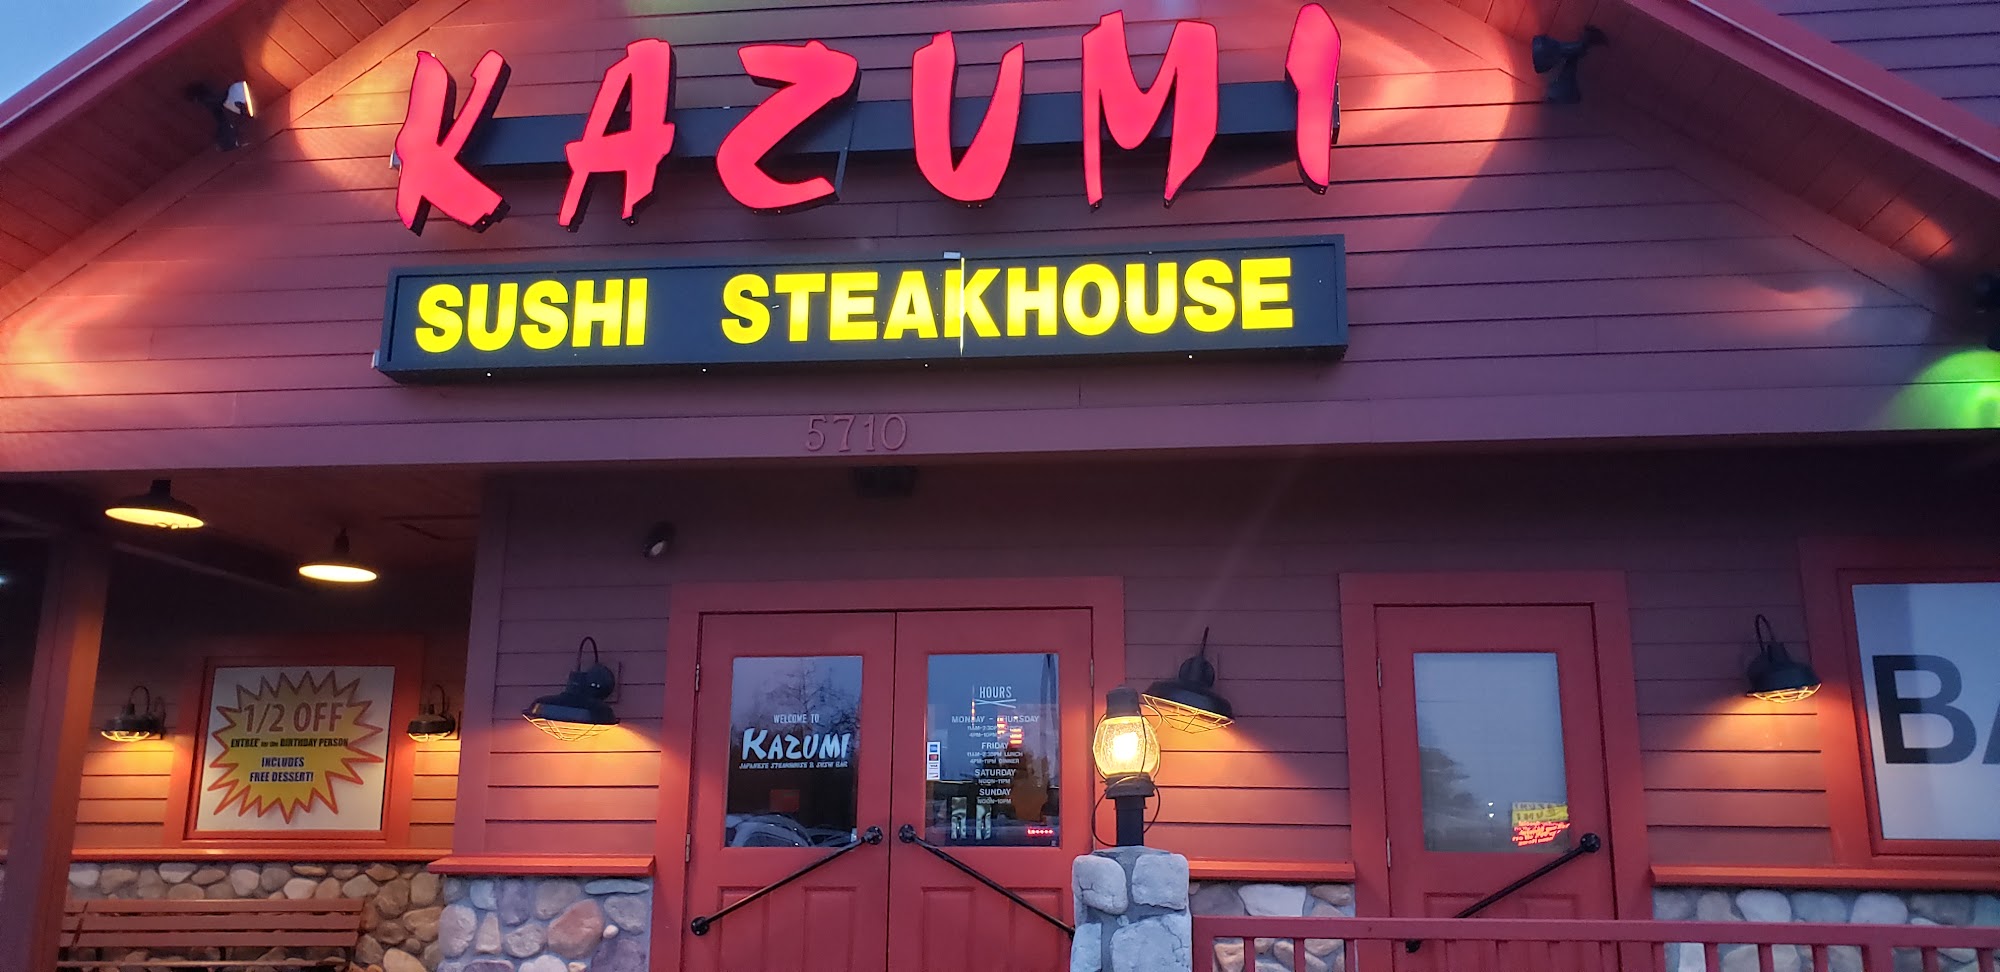 Kazumi Japanese Steakhouse